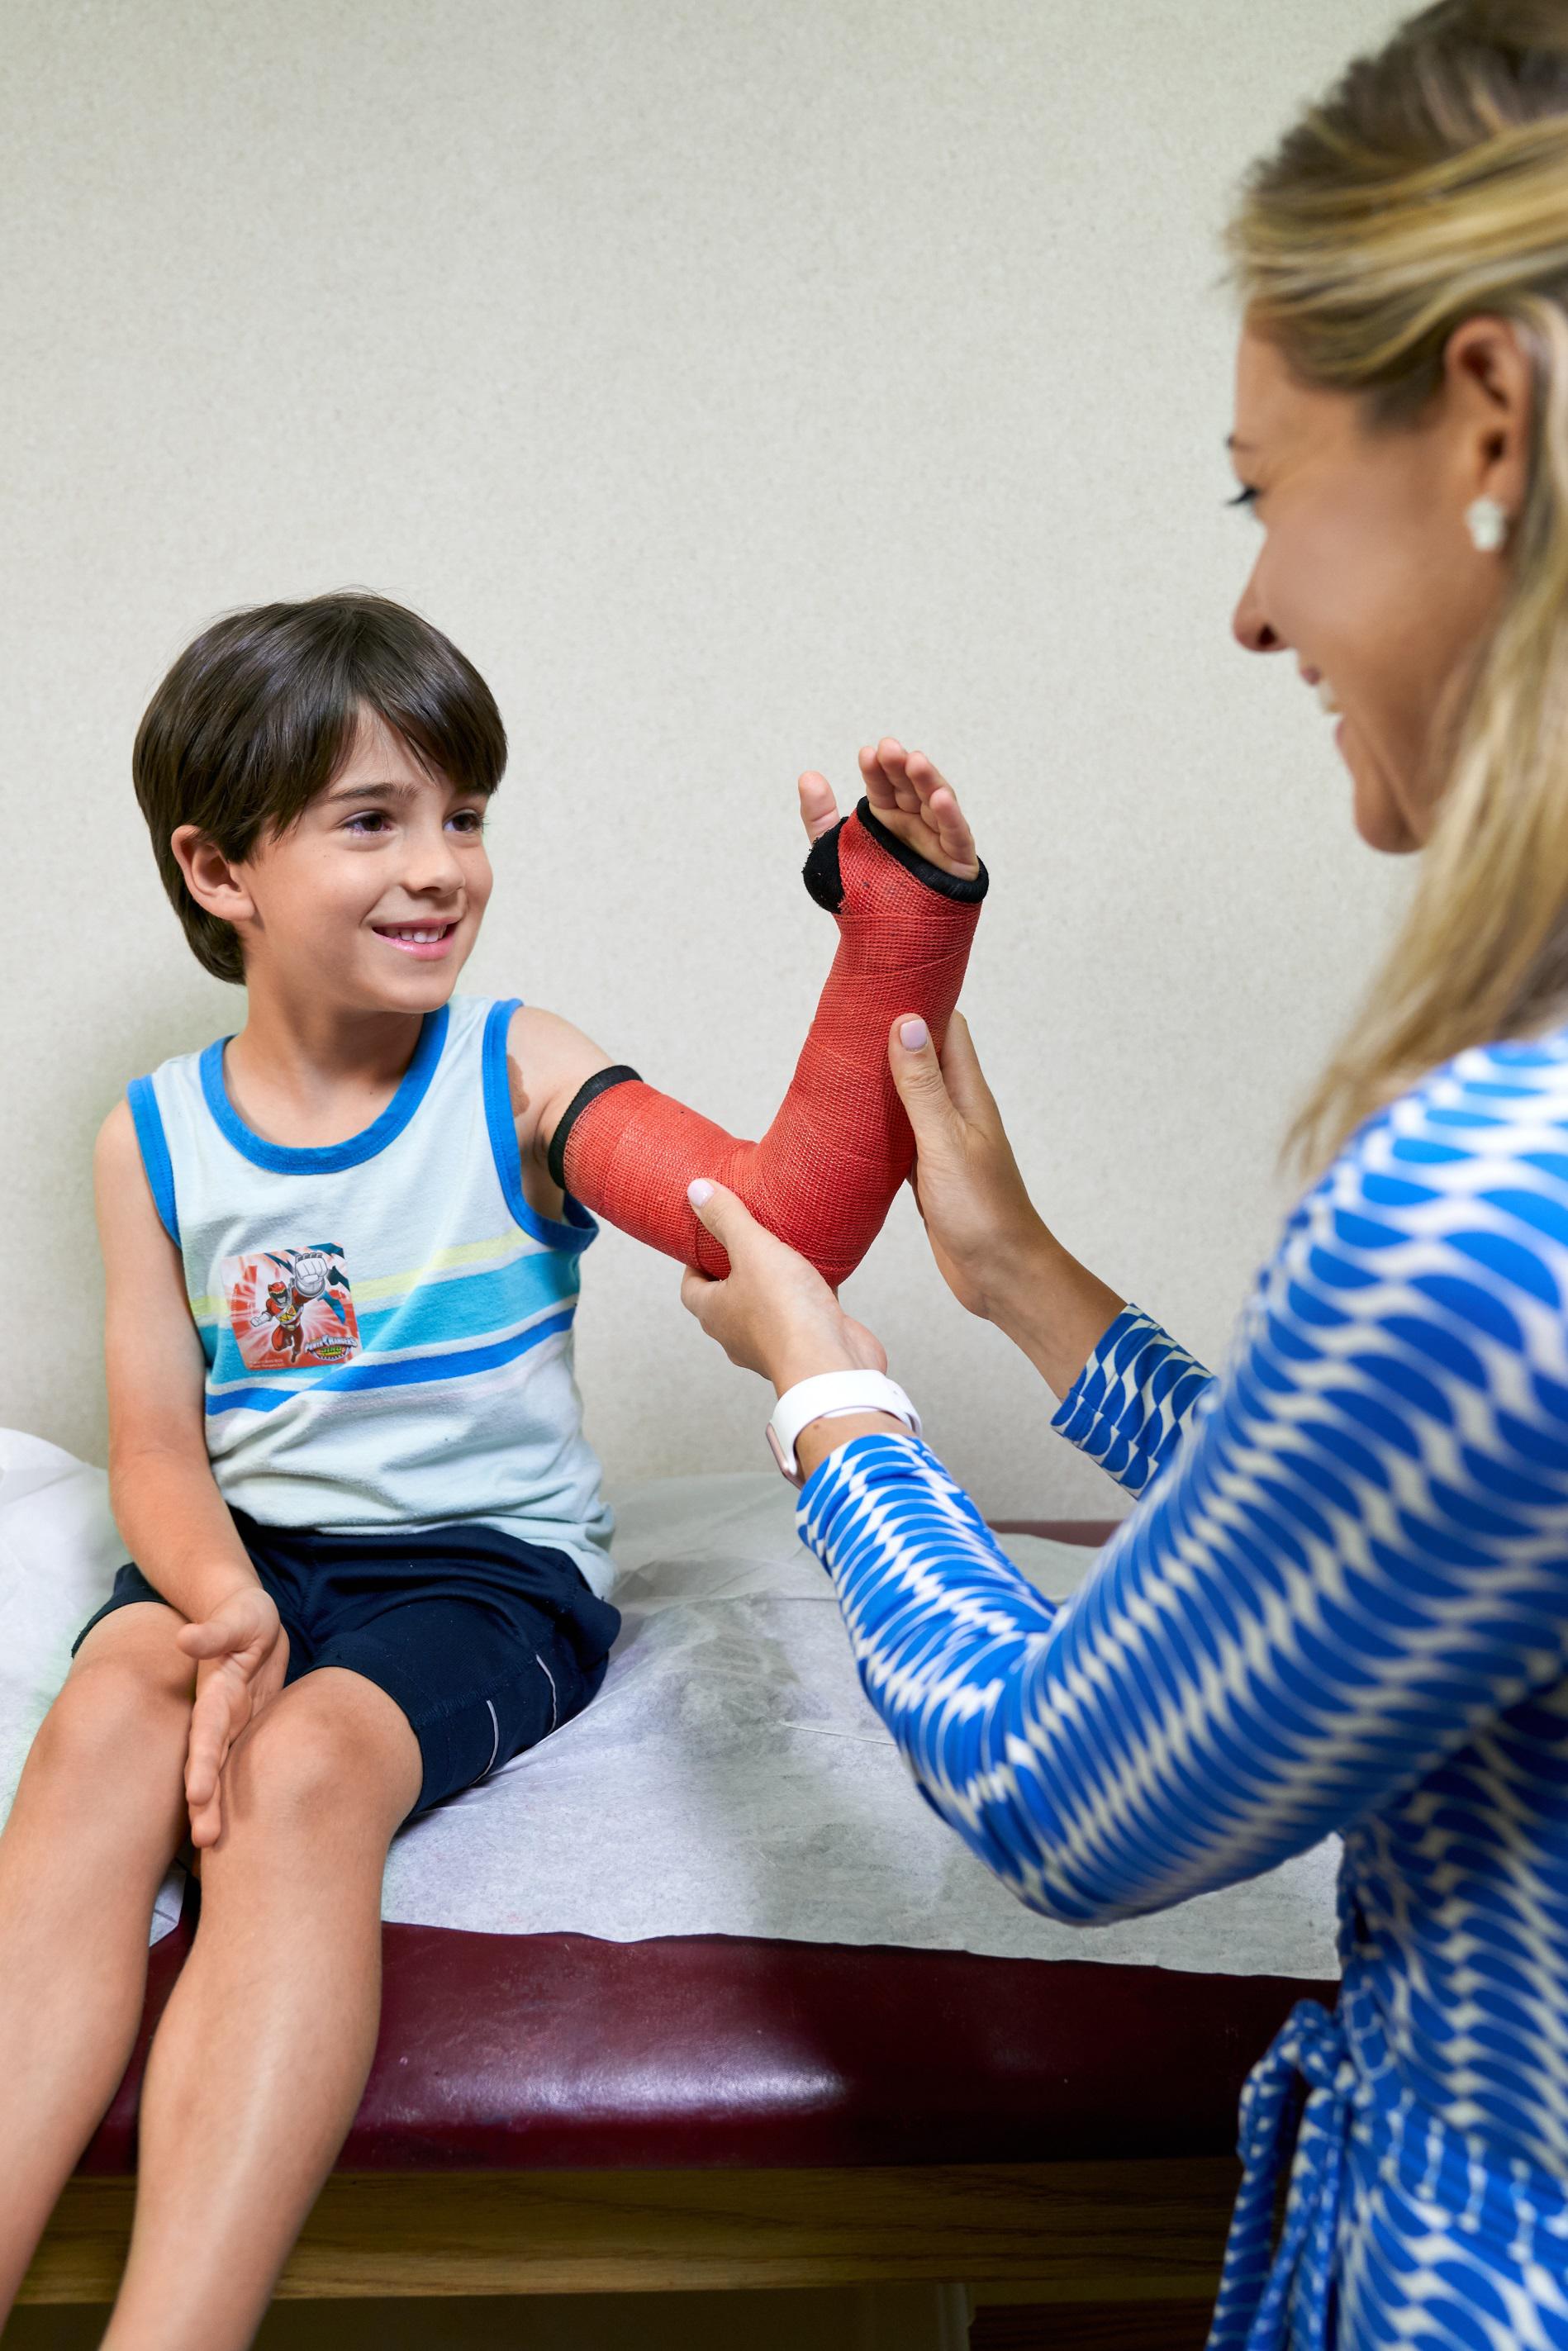 Children's Orthopaedics and Sports Medicine - Meridian Mark Photo